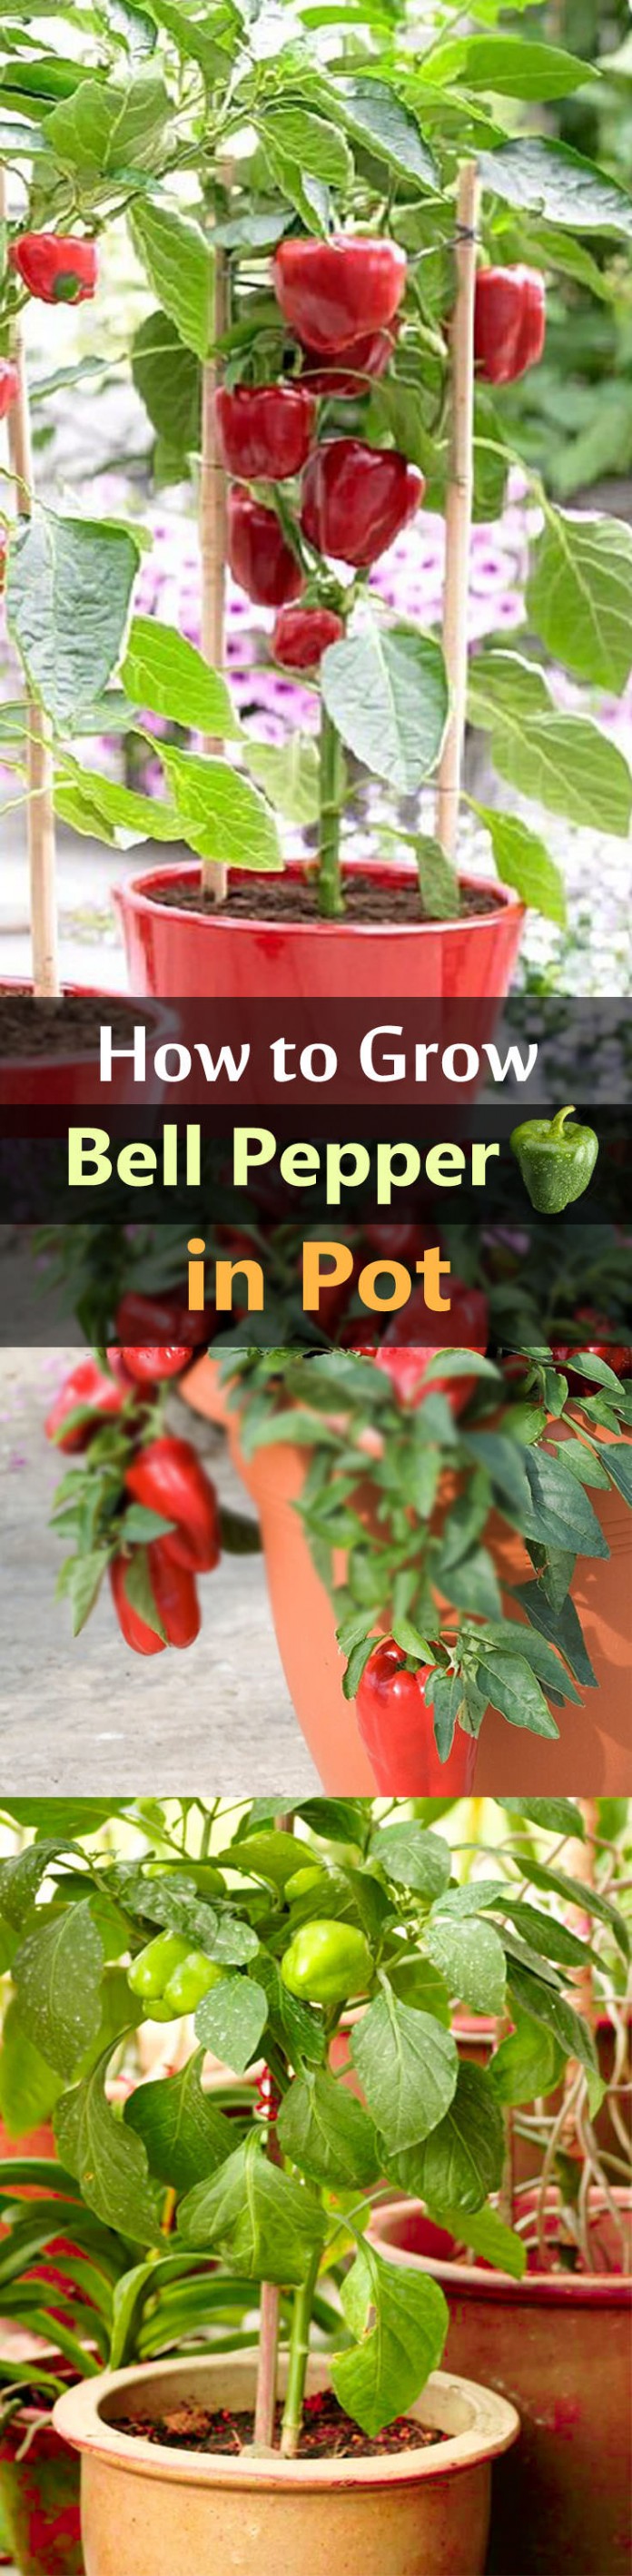 growing-bell-pepper-in-pot-1